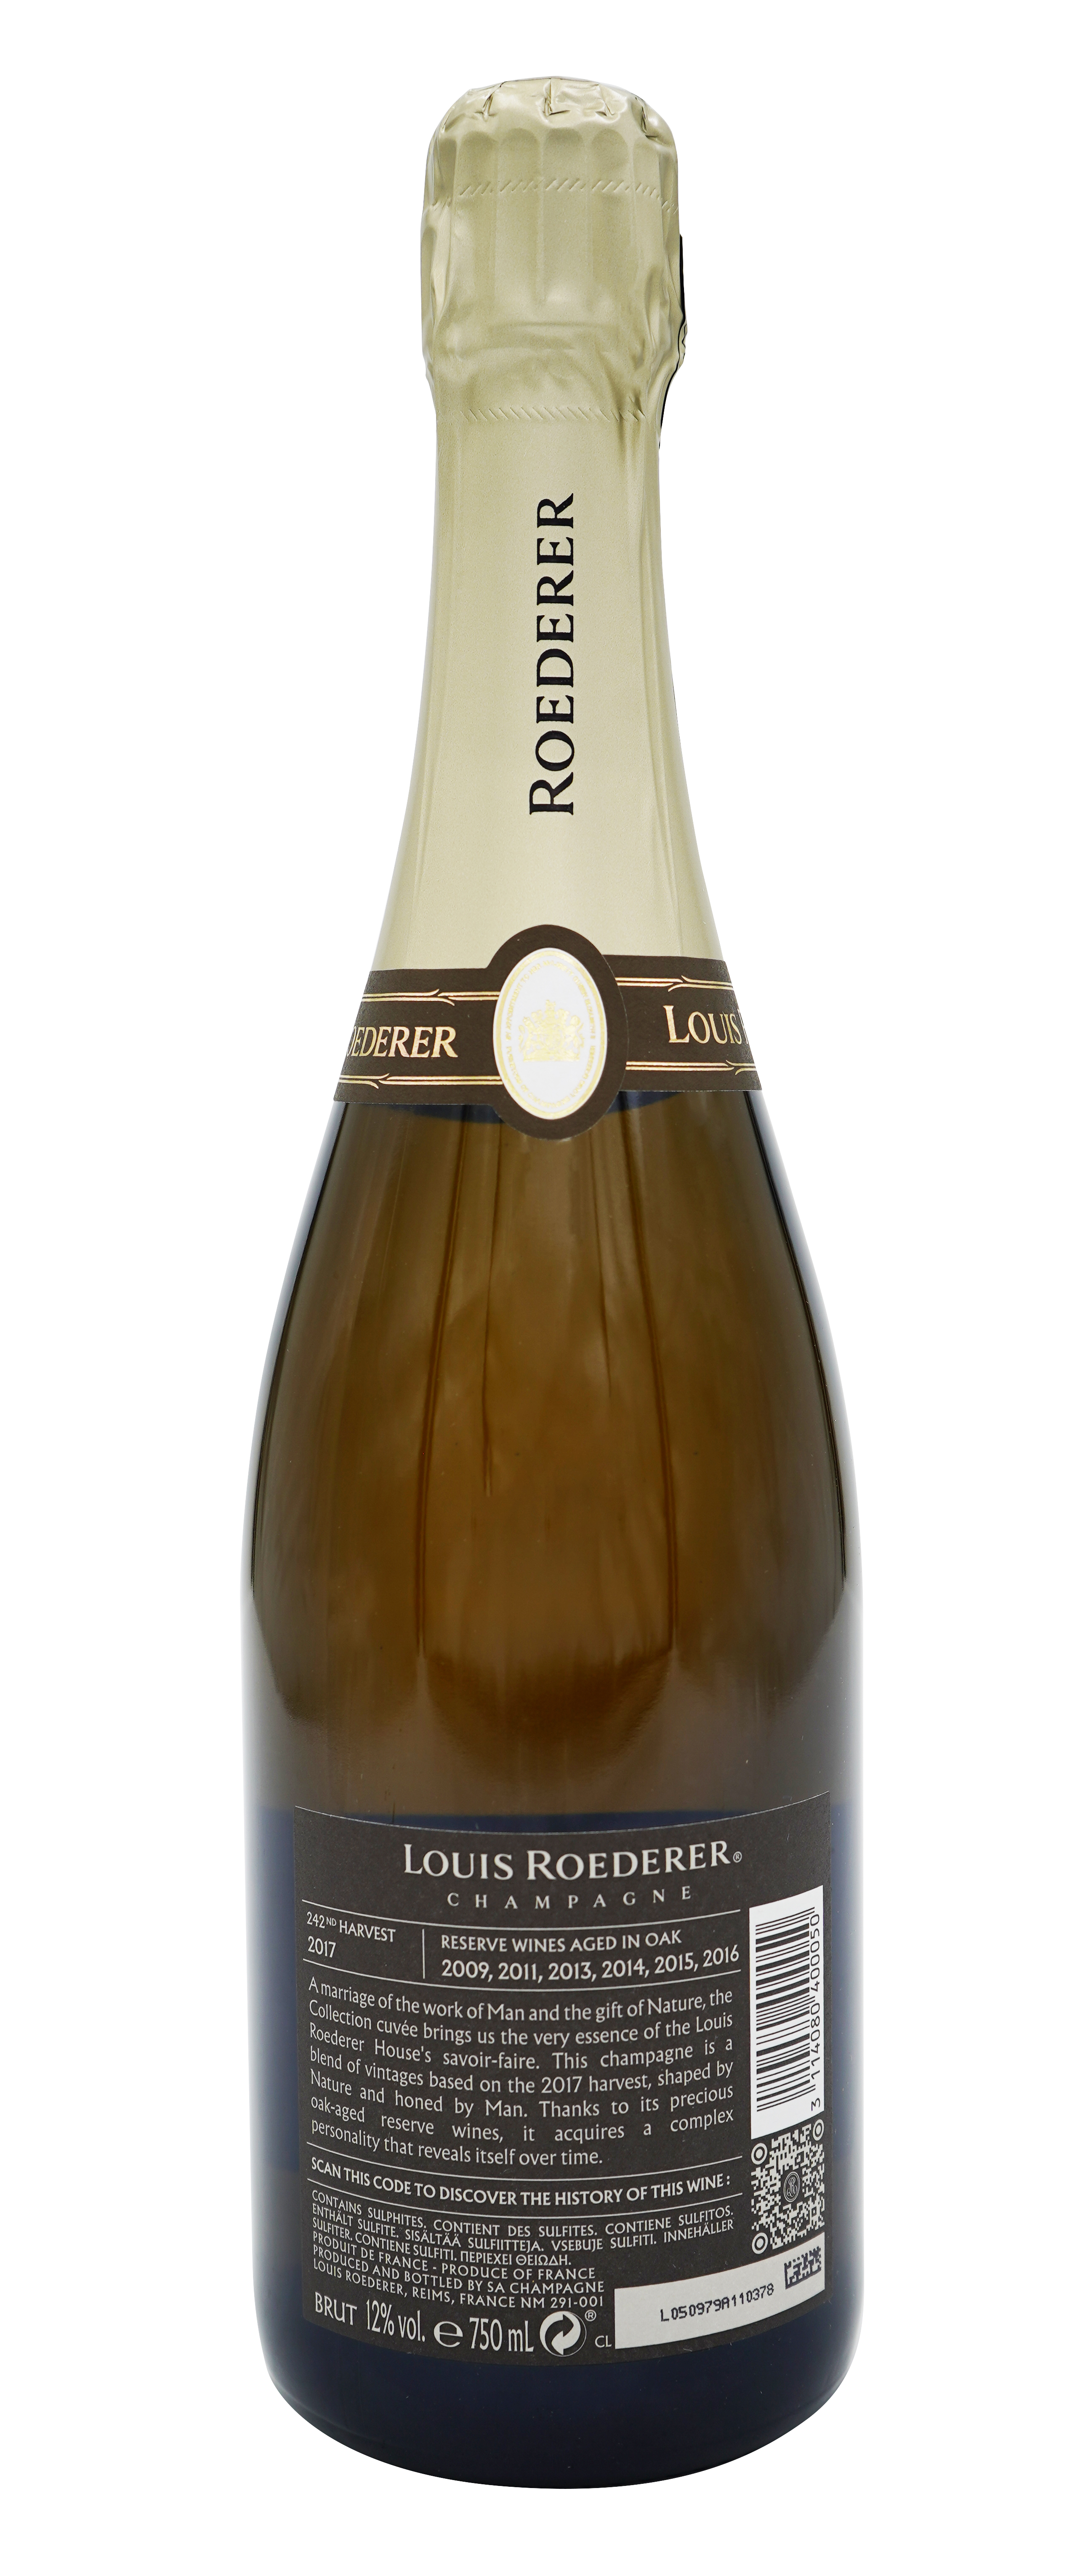 Louis Roederer Champagner Collection 242 - back label